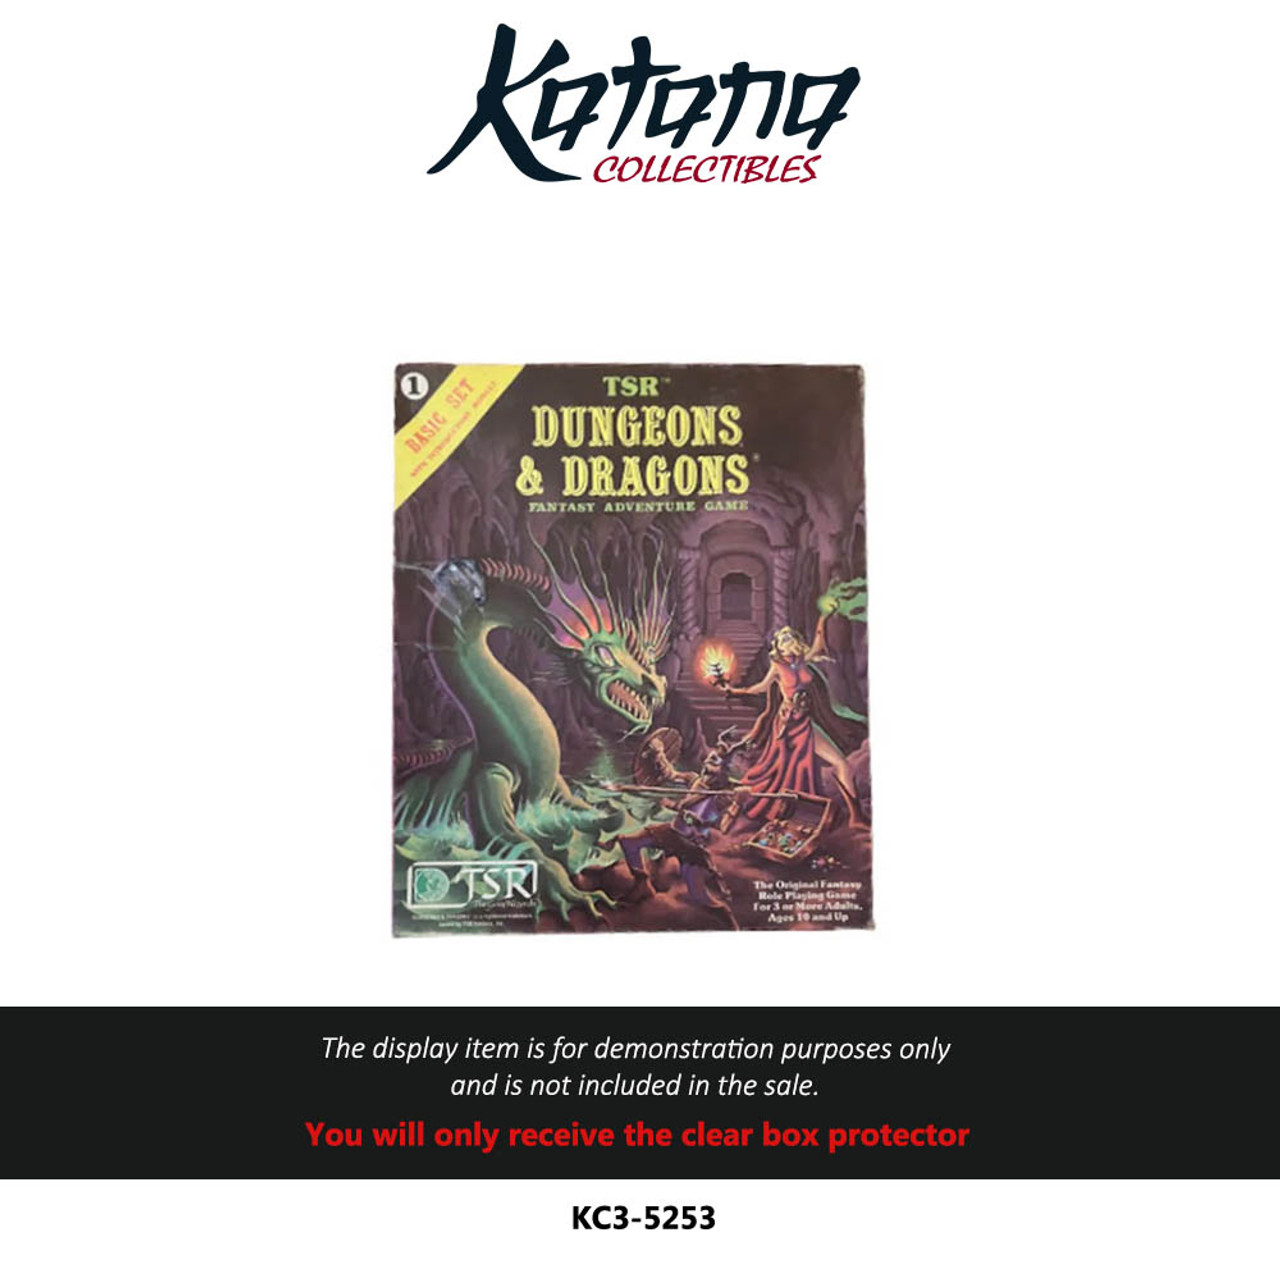 Katana Collectibles Protector For Original Dungeons and Dragons Boxed Set